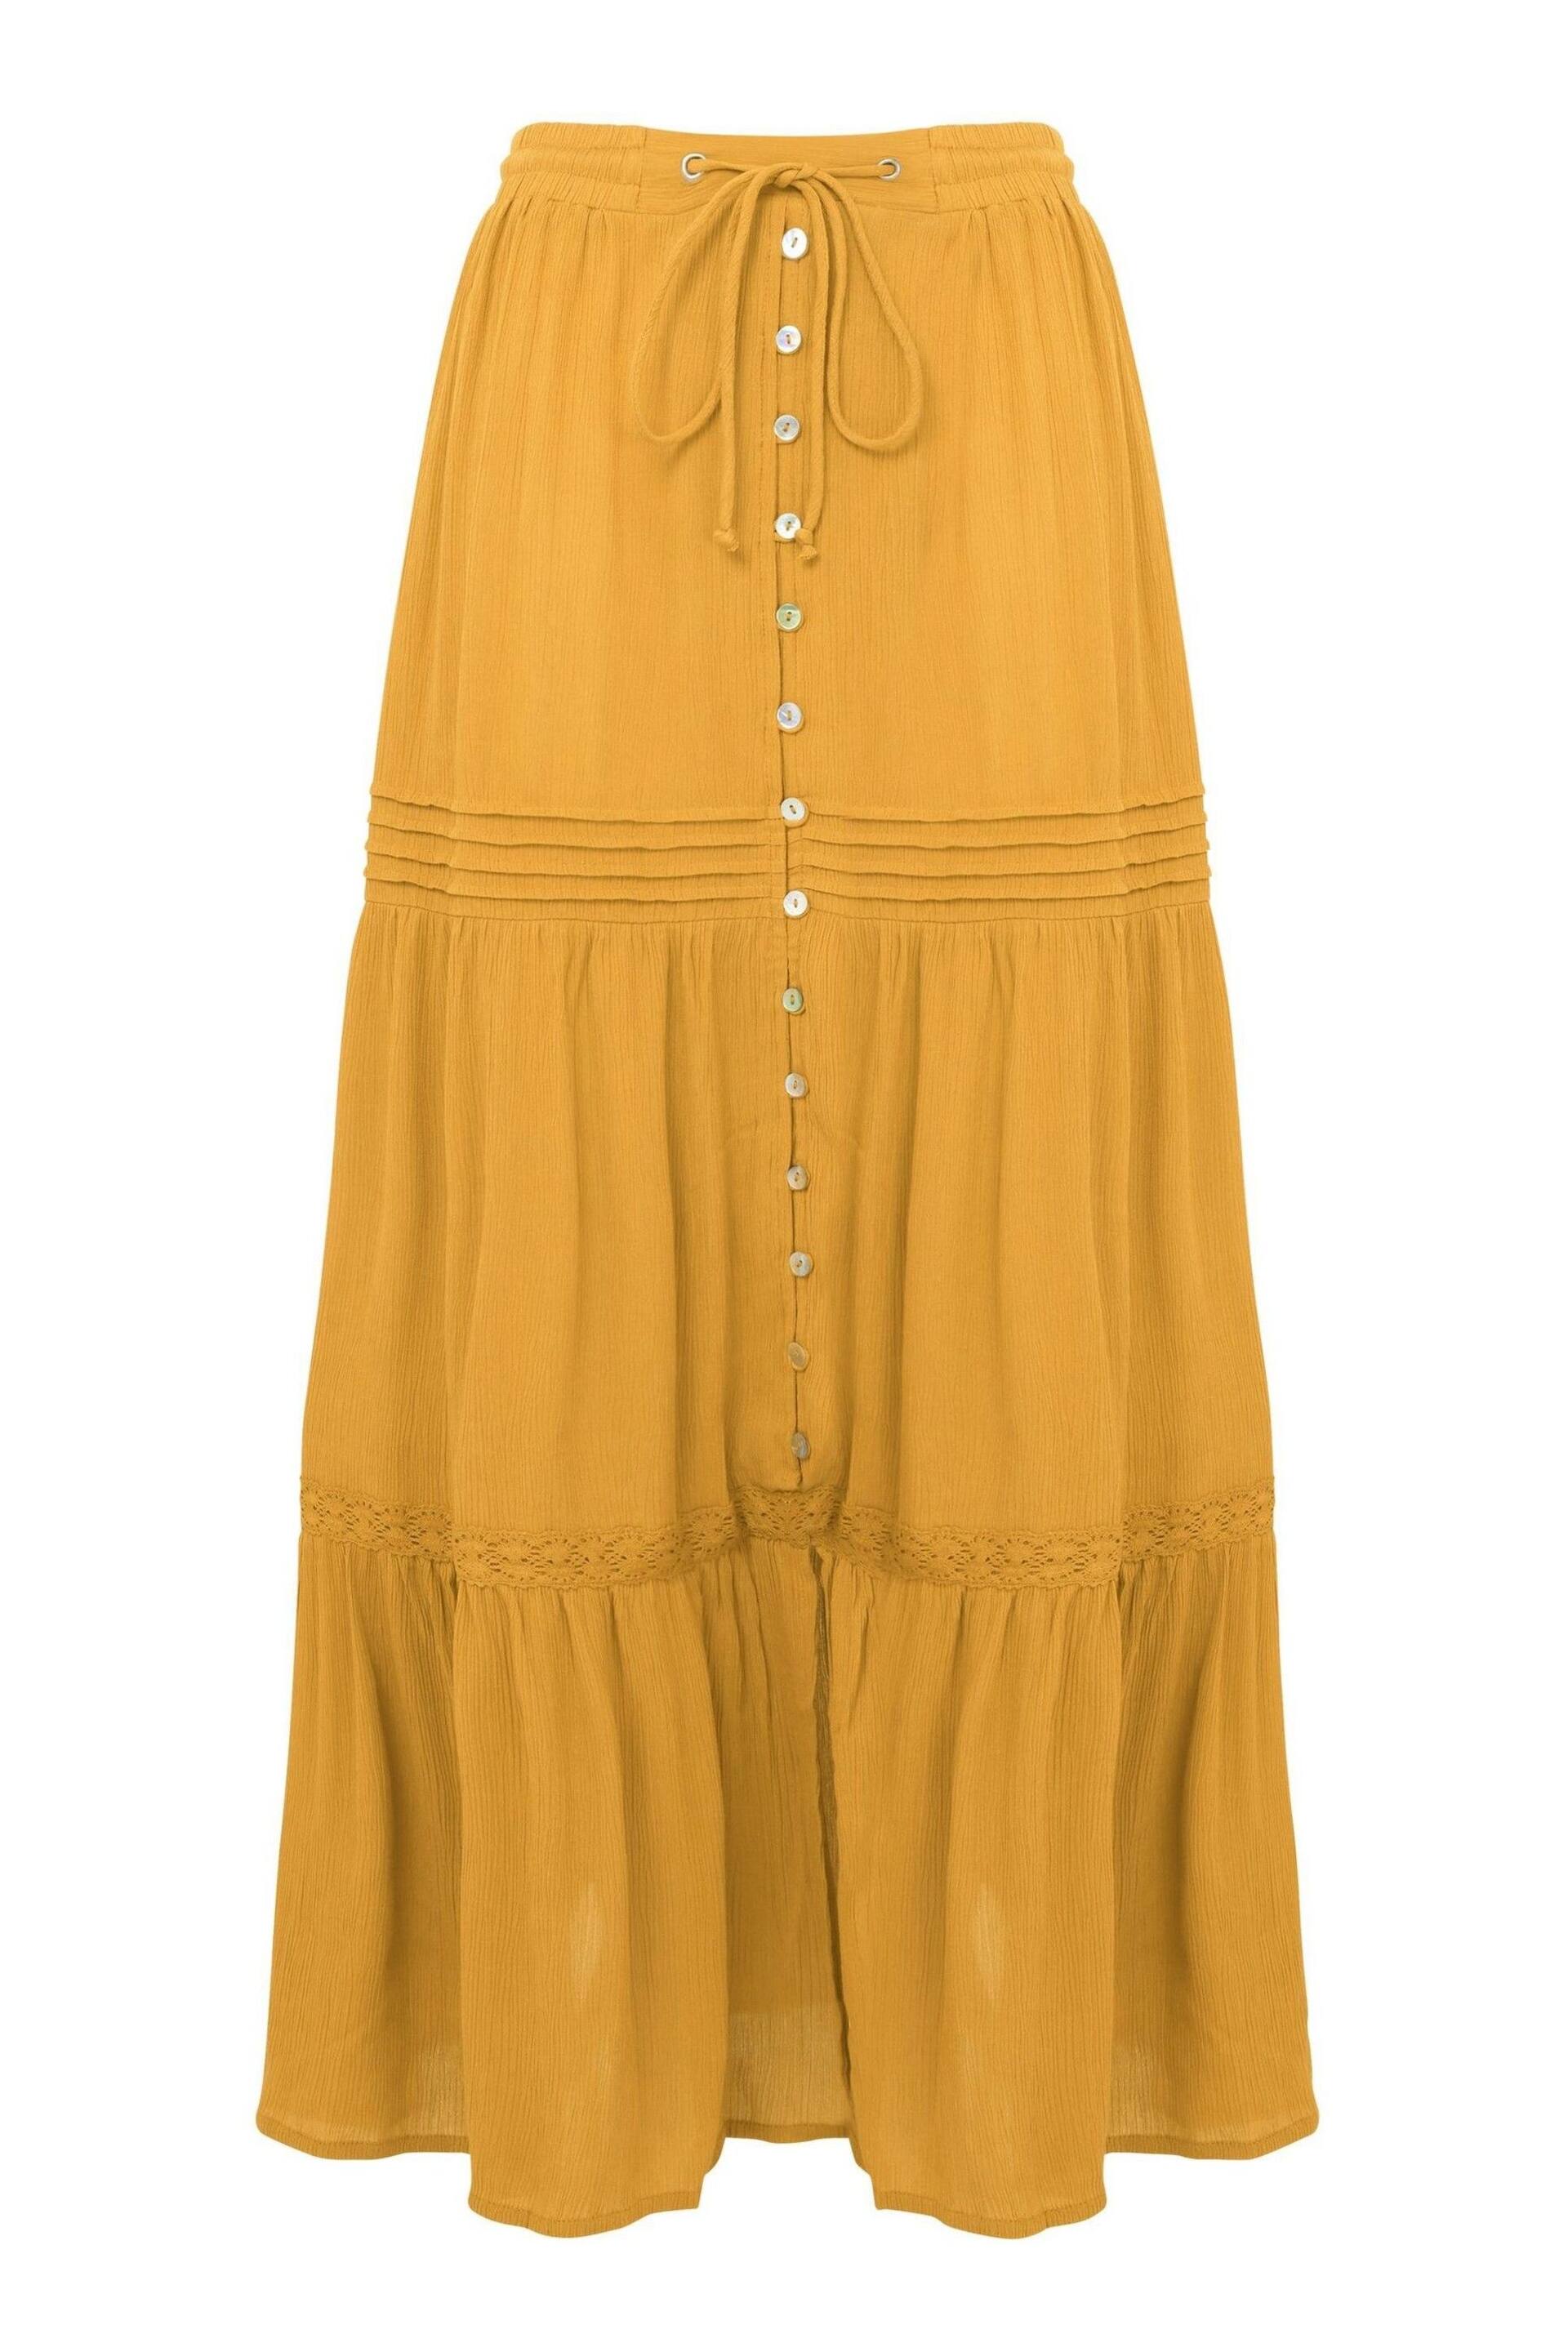 Joe Browns Yellow Pintuck Tie Waist Maxi Skirt - Image 5 of 5